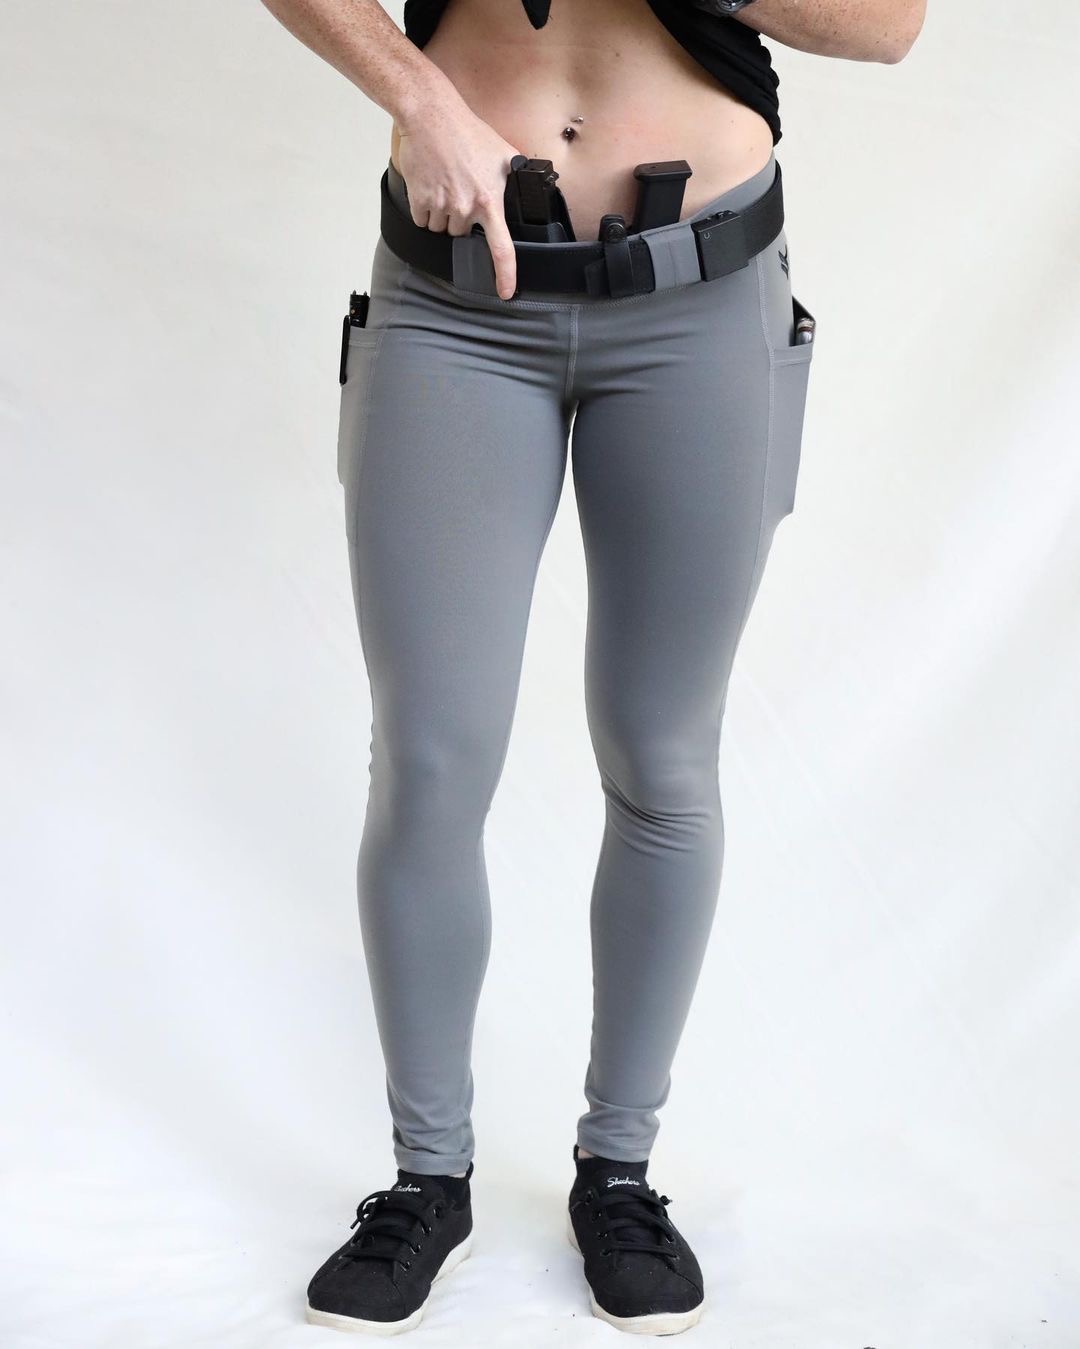 https://gunmagwarehouse.com/blog/wp-content/uploads/2020/11/Vakandi-Apparel-womens-tactical-pant-leggings-8.jpg